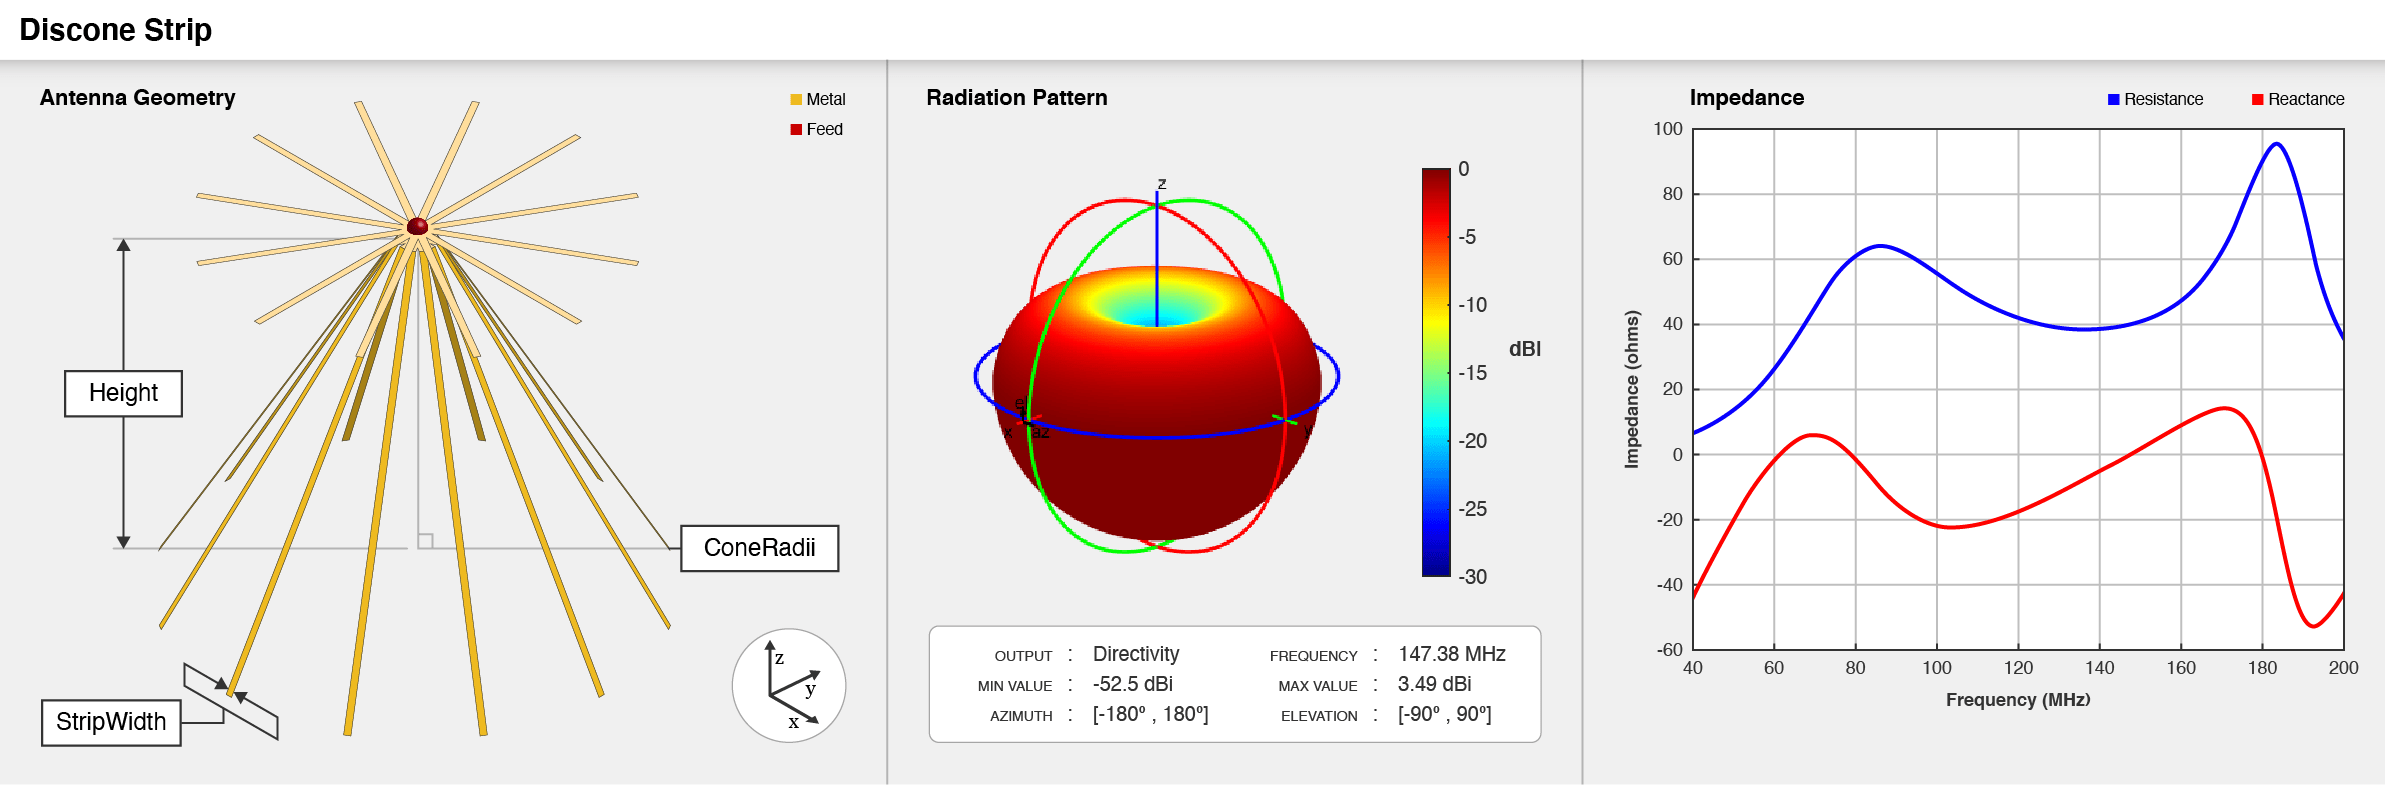 Strip discone antenna geometry, default radiation pattern, and impedance plot.